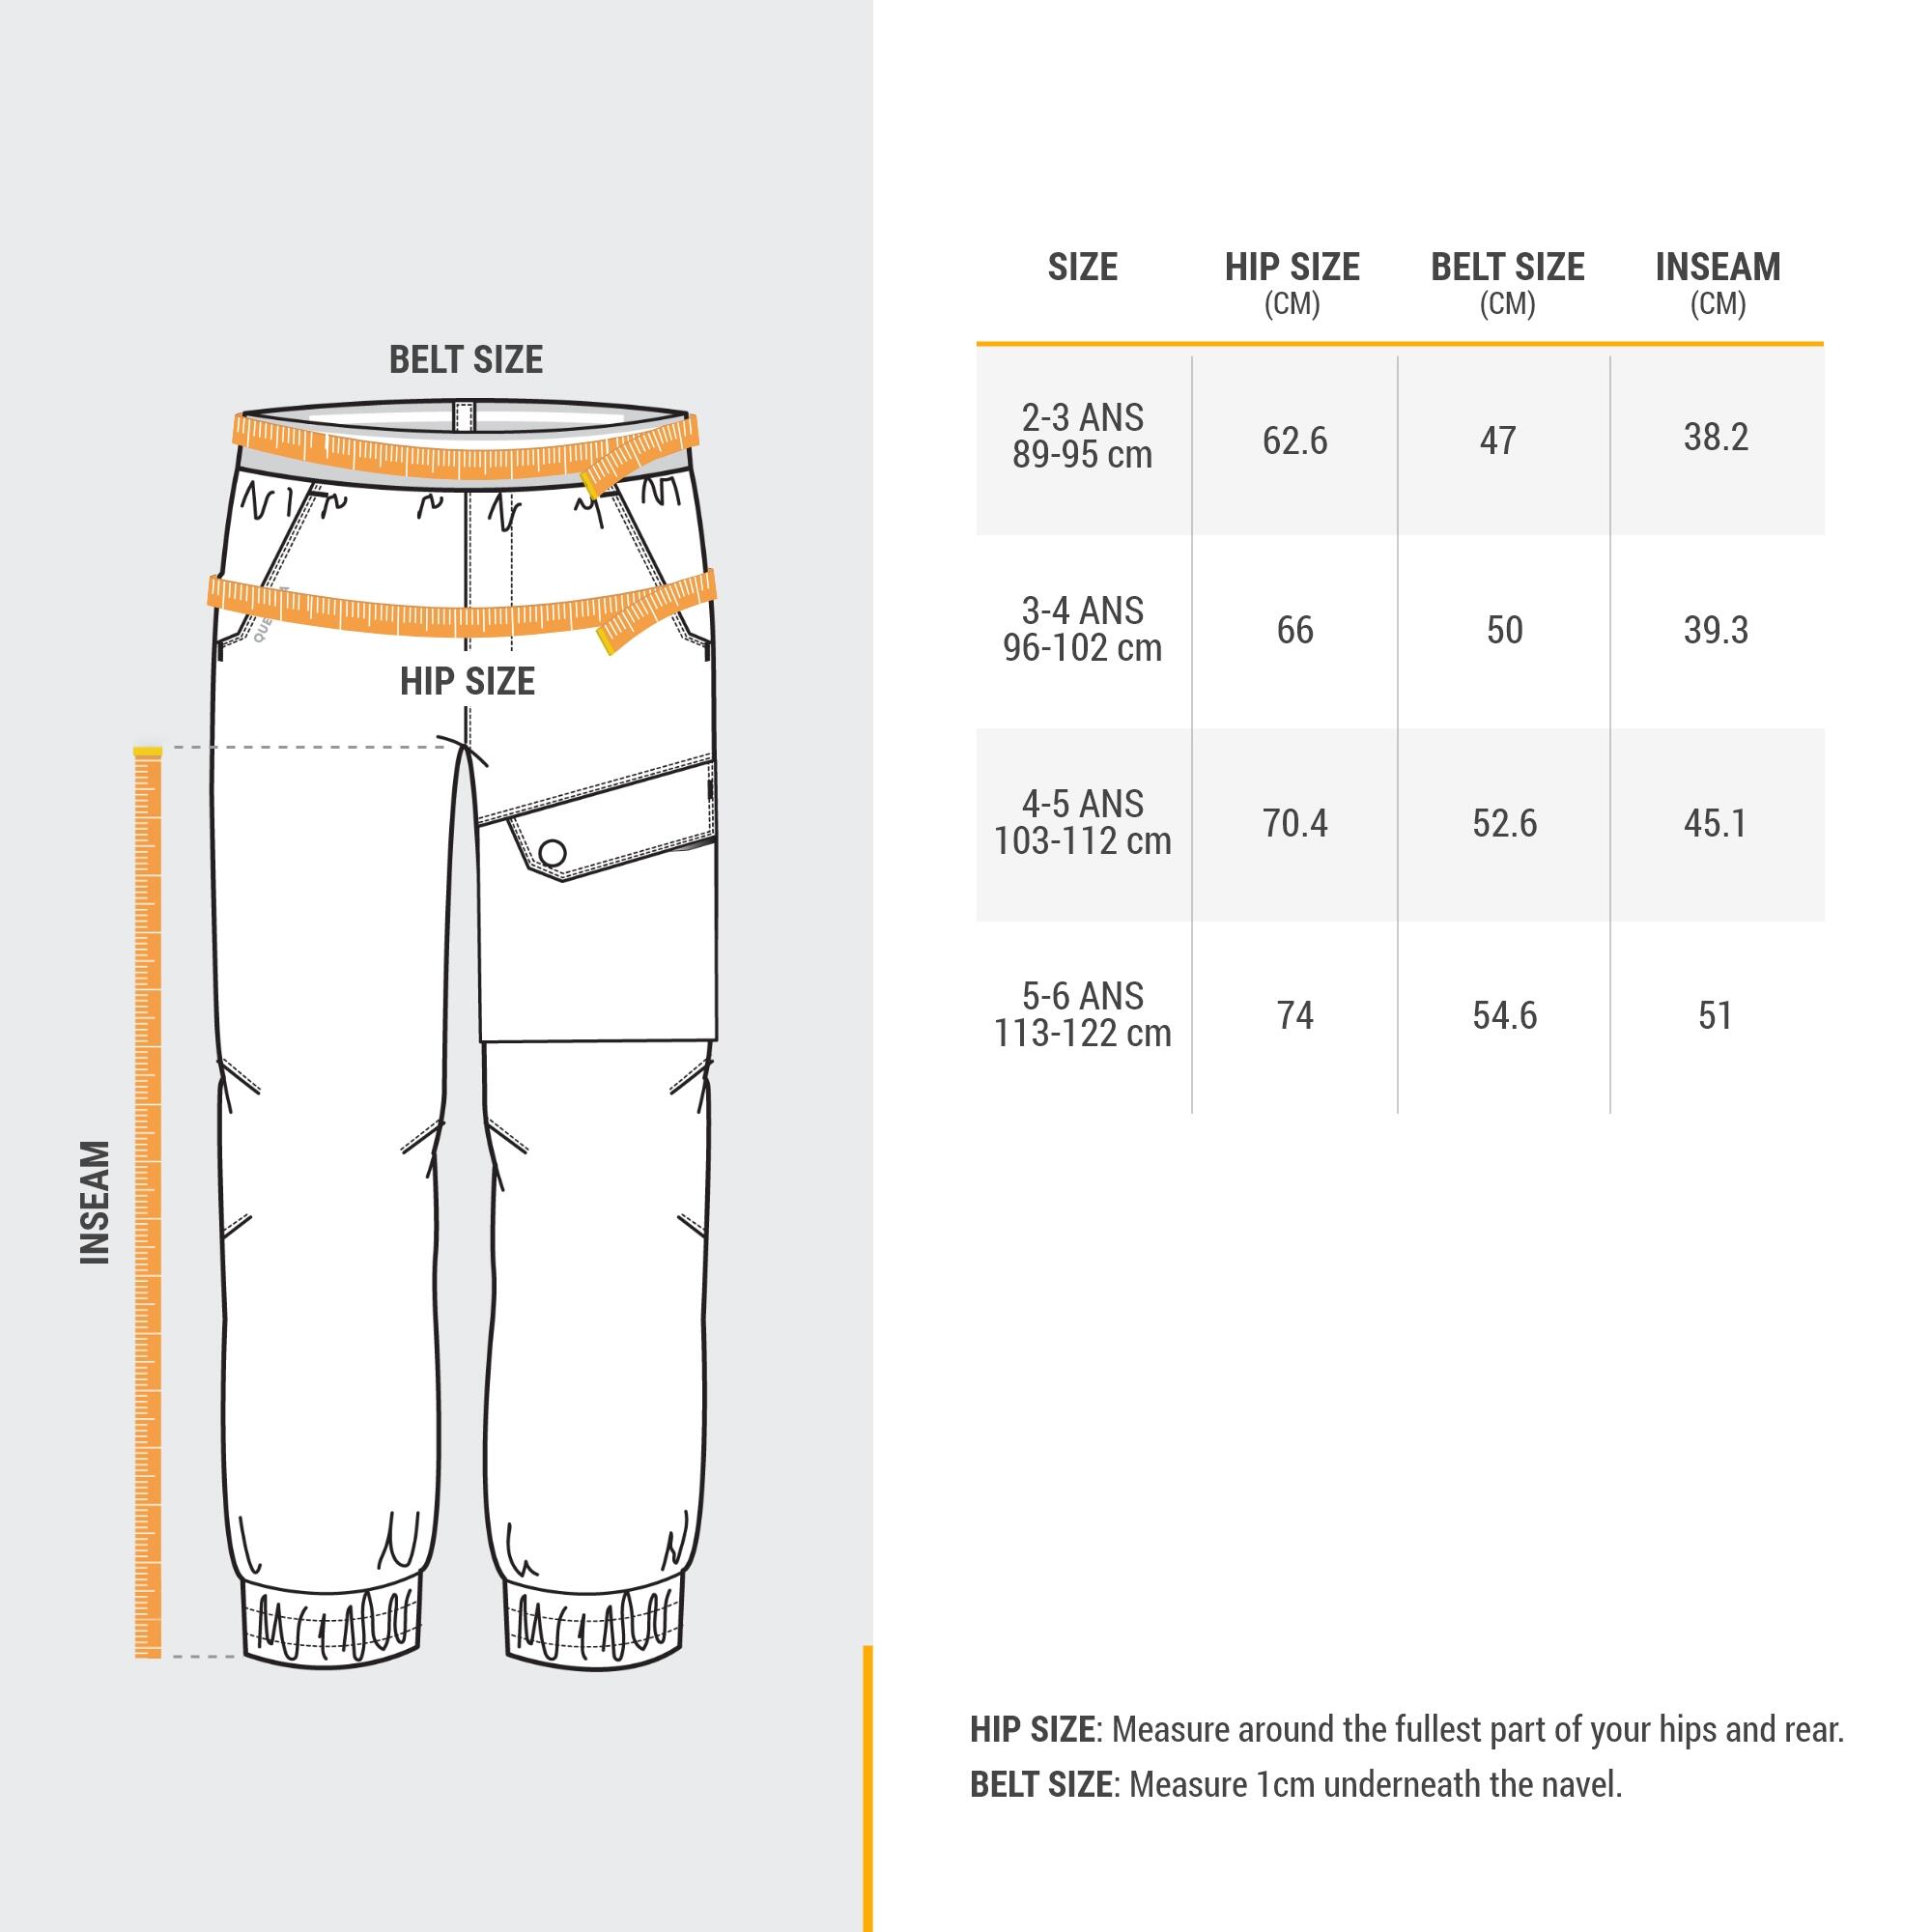 Kids' Ski Pants with Removable Straps - 100 Grey